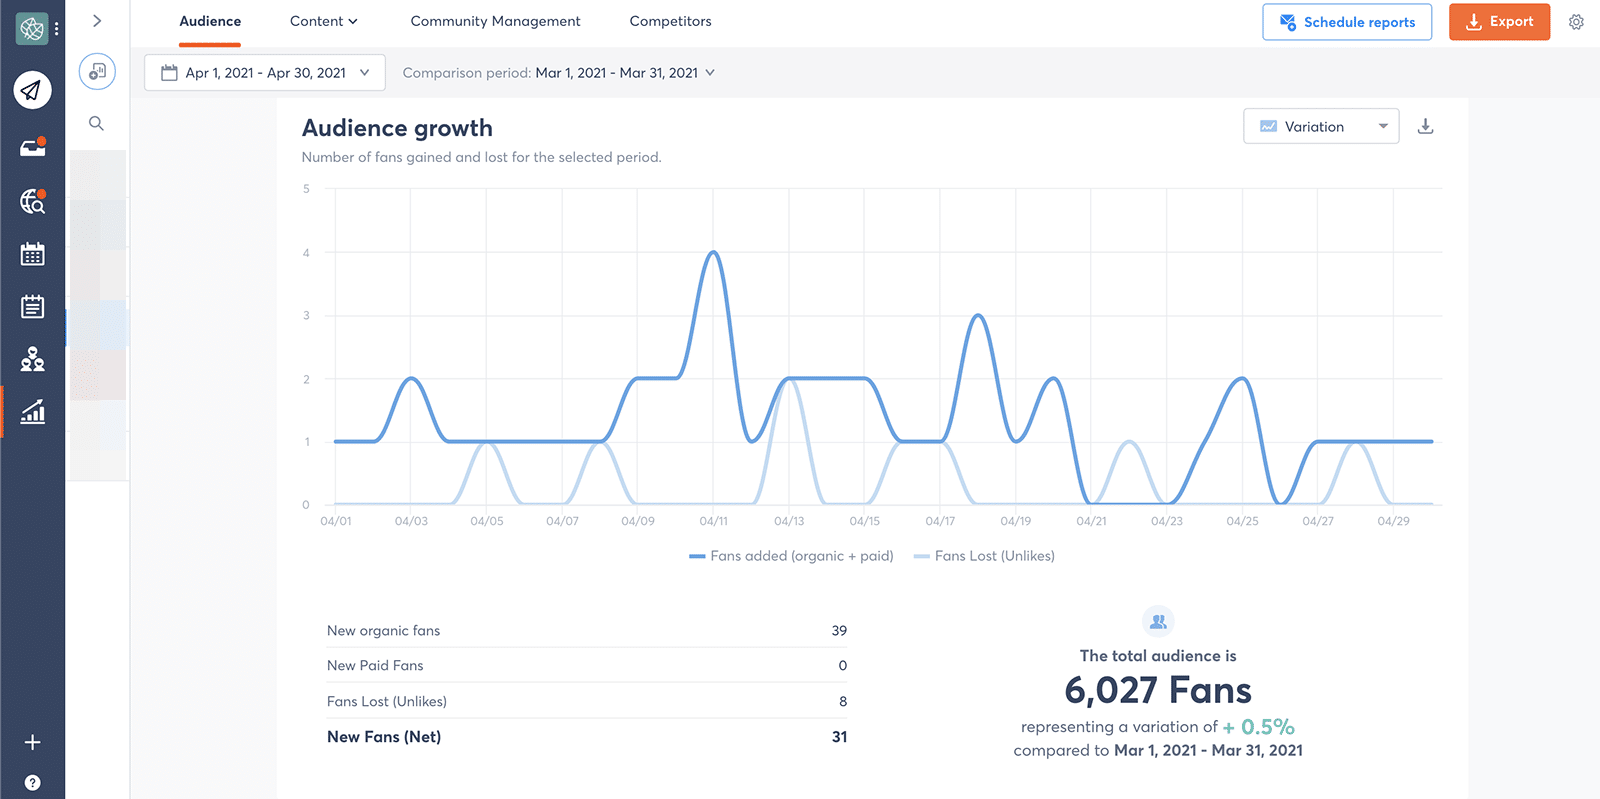 Facebook metrics - audience growth variation